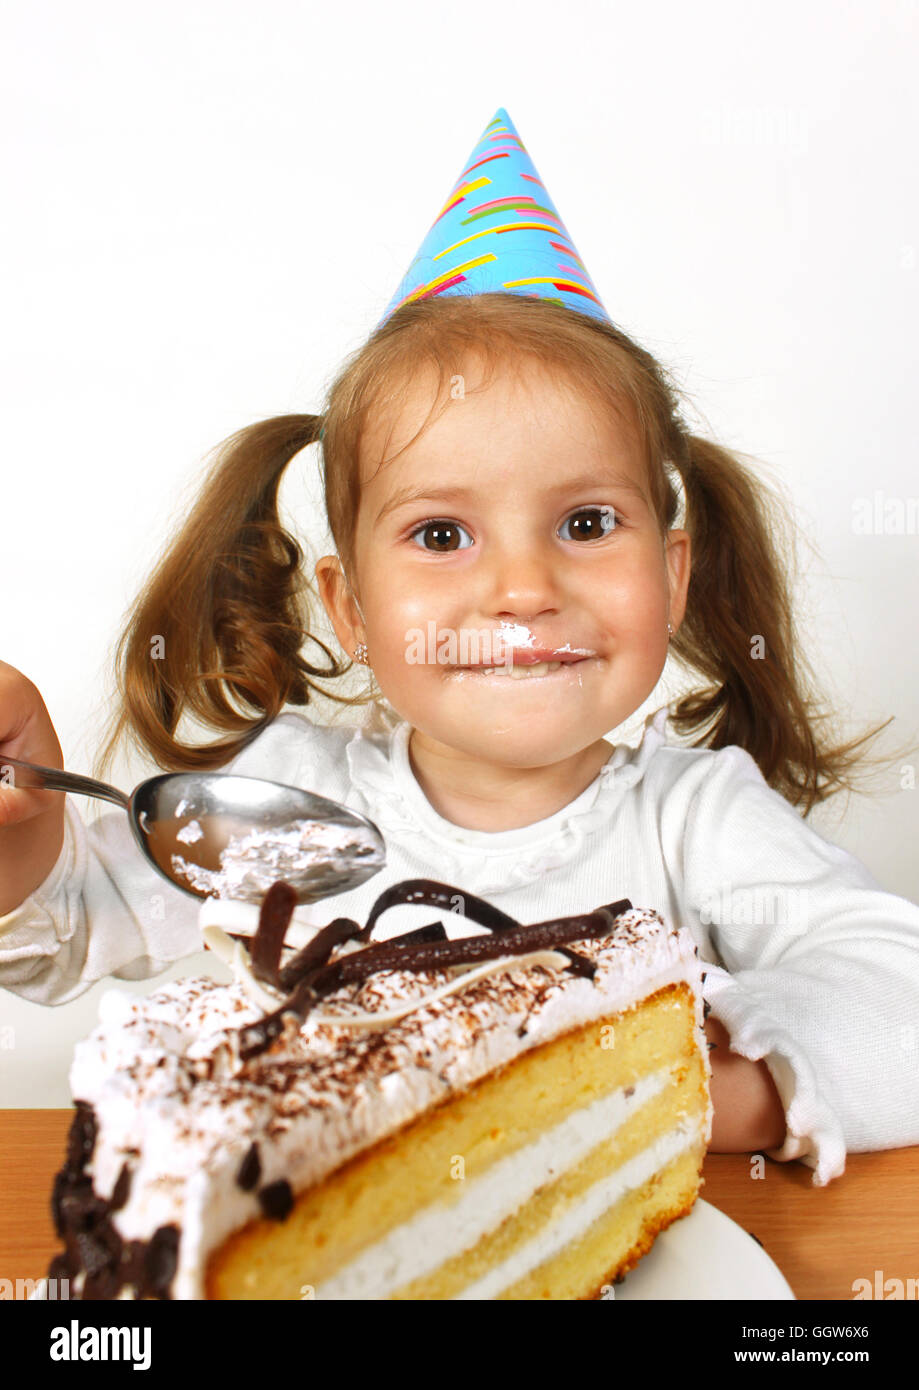 Portrait d'enduit peu girl with birthday hat eating cake Banque D'Images